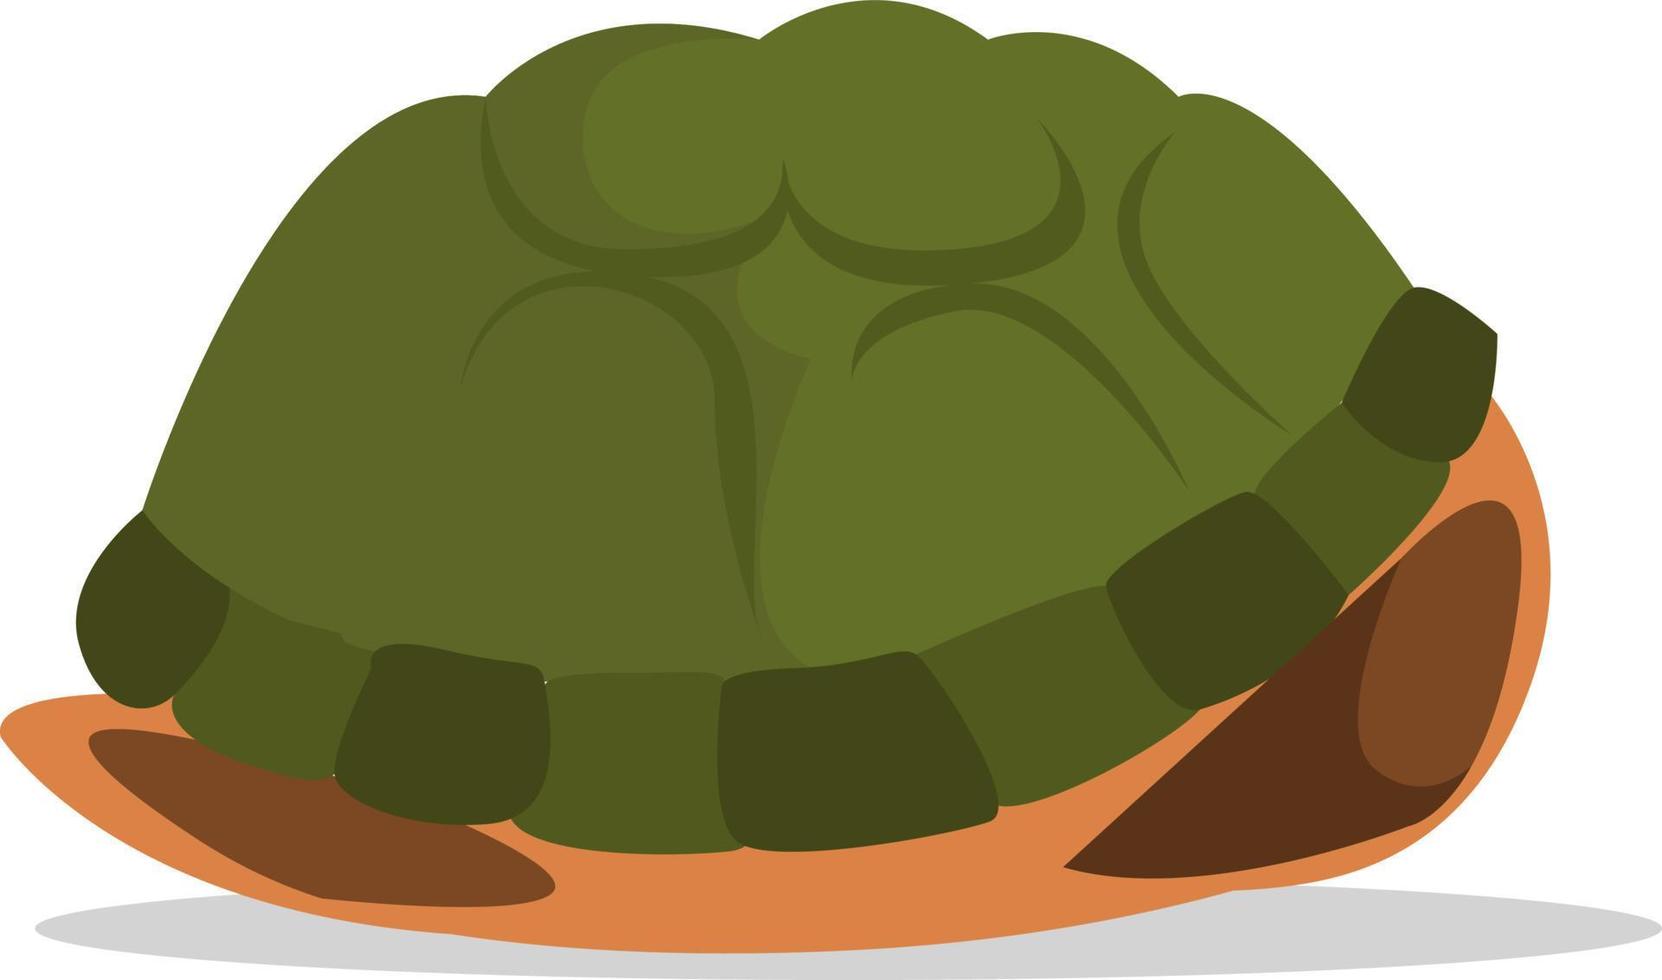 Turtles shell, illustration, vector on white background